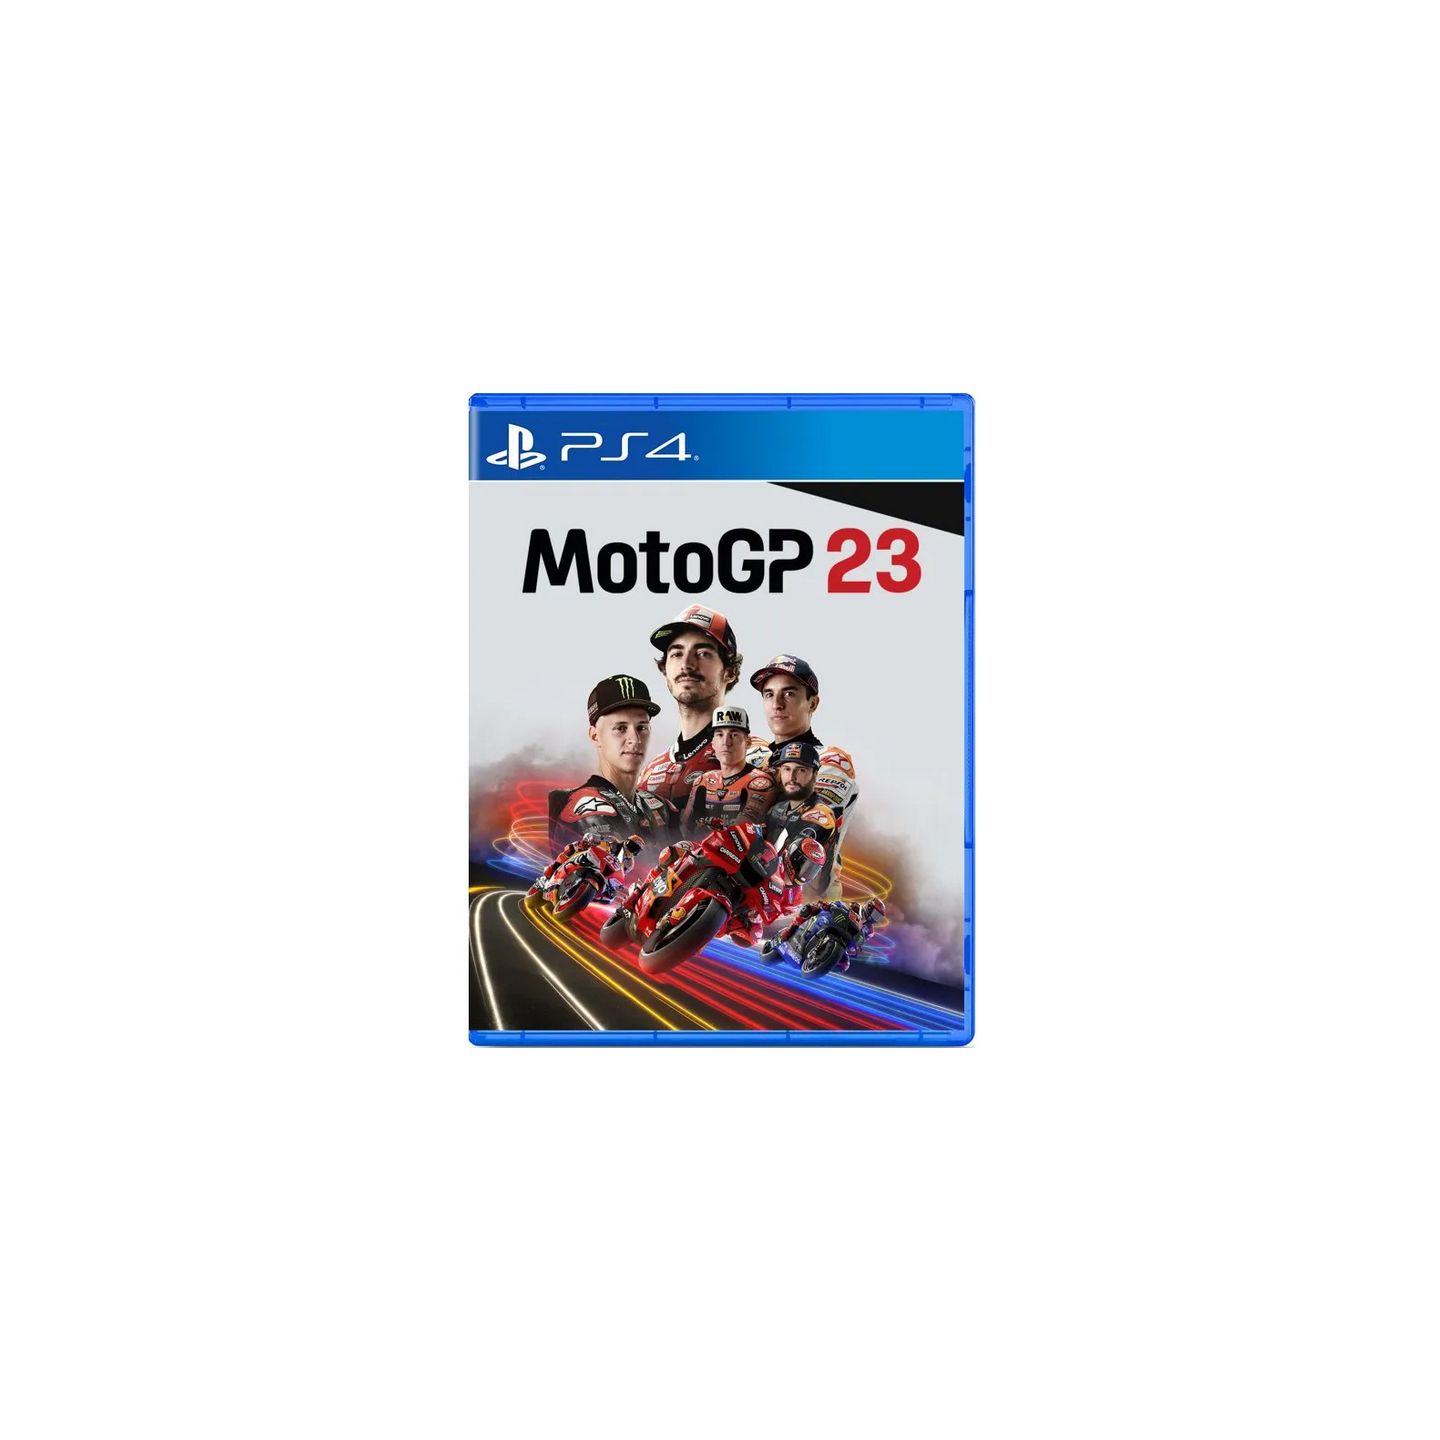 MotoGP 23, Sony Playstation 4